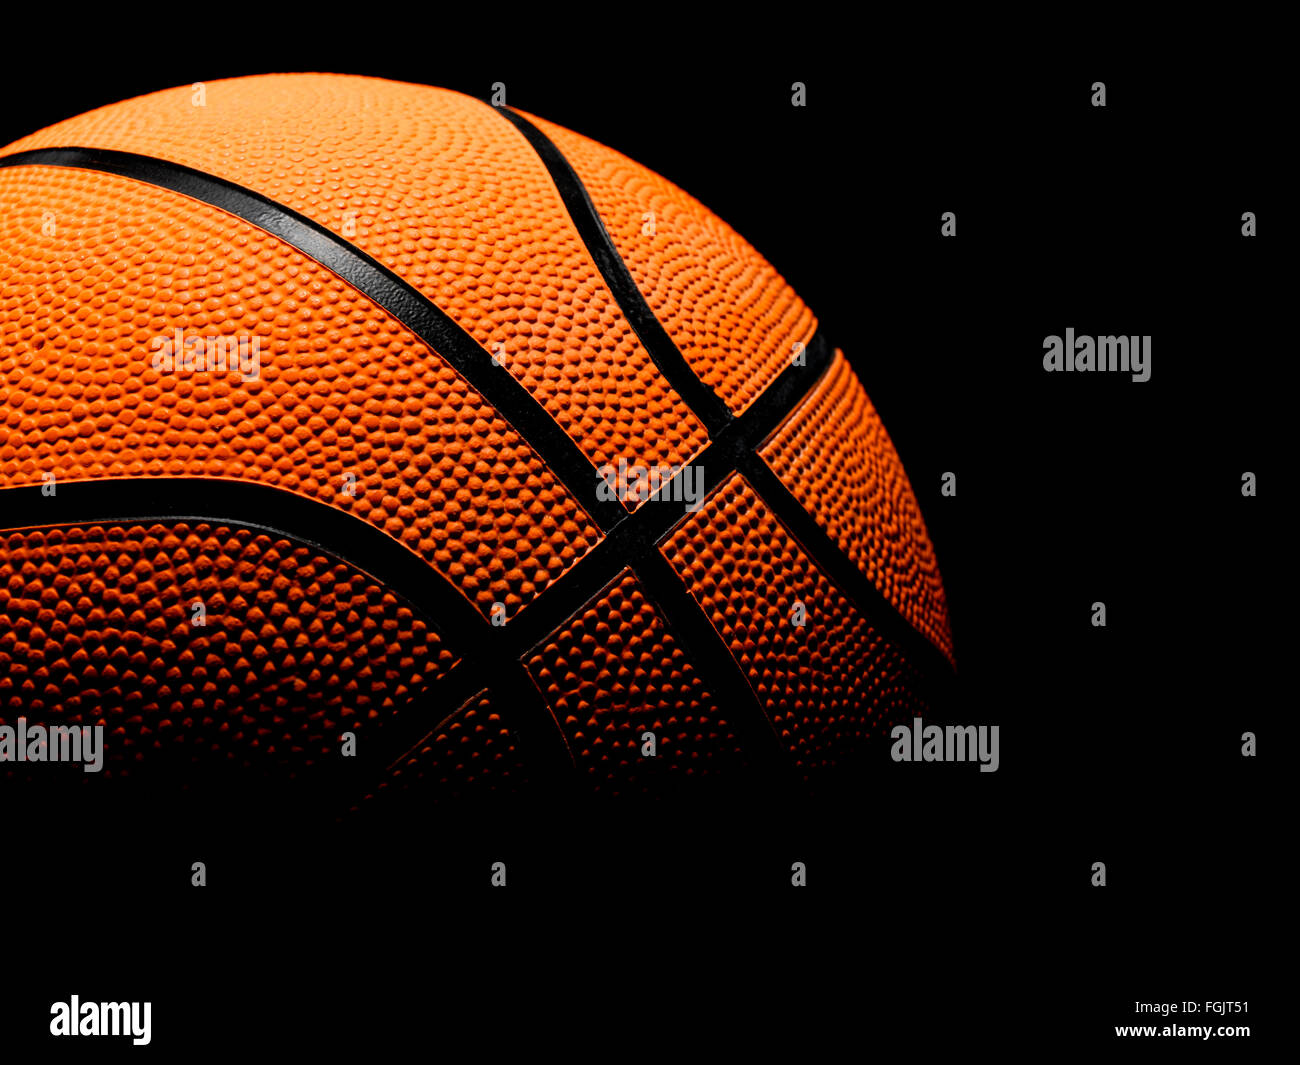 Single Basketball on a black background Stock Photo